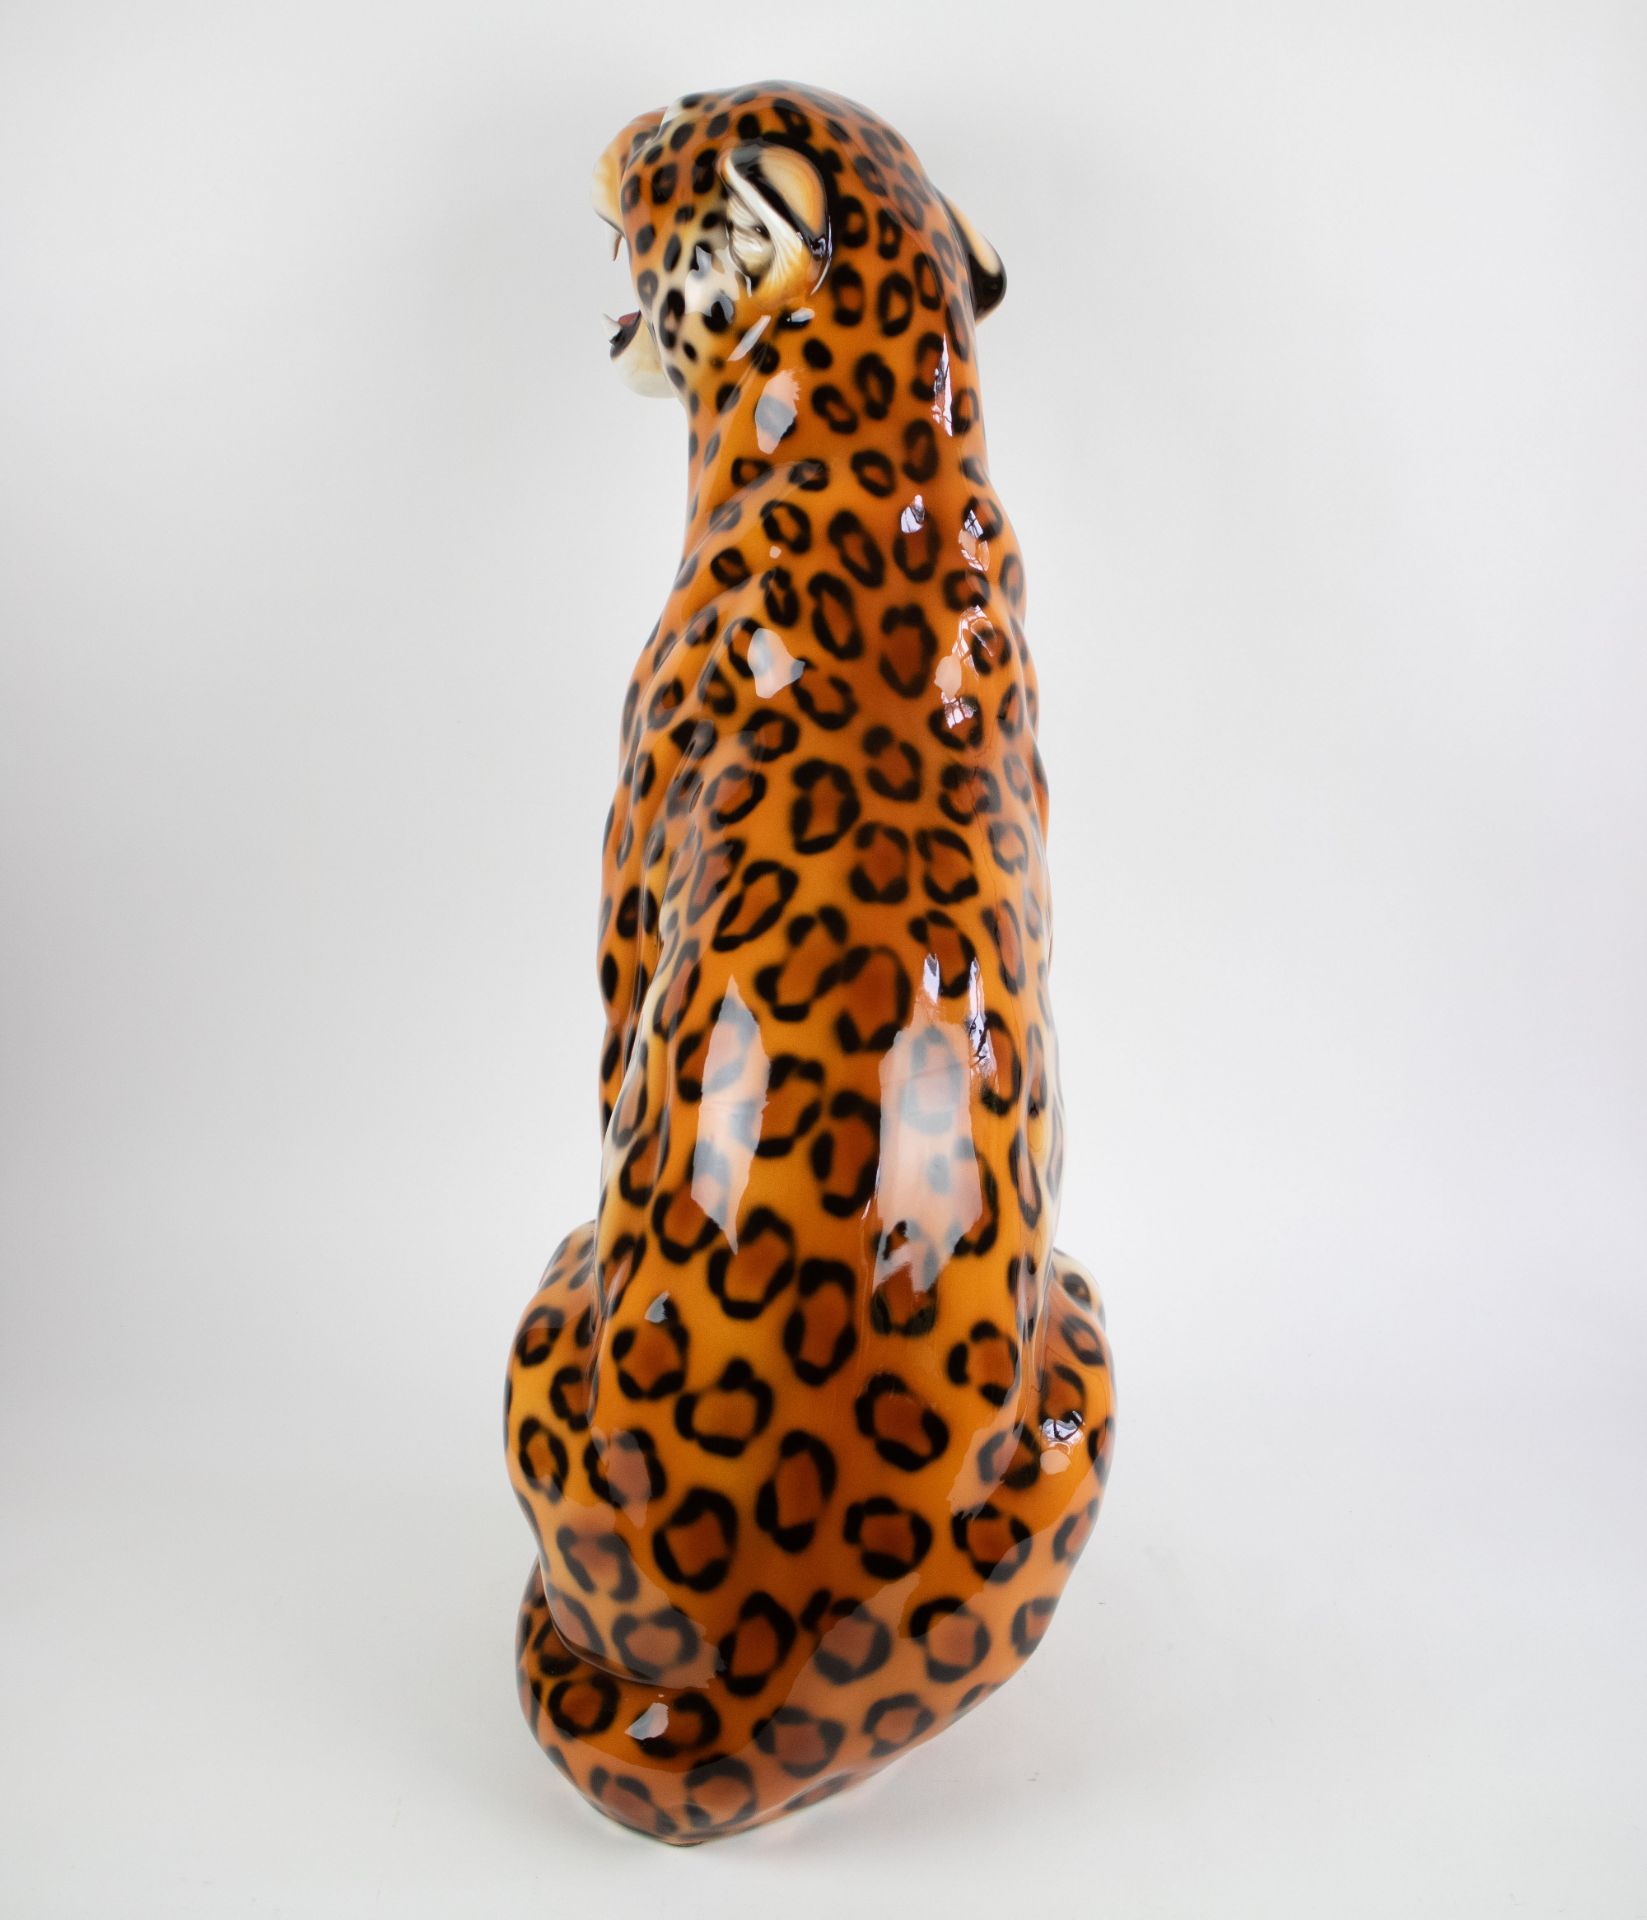 Italian Ceramic sculpture of a leopard - Image 3 of 5